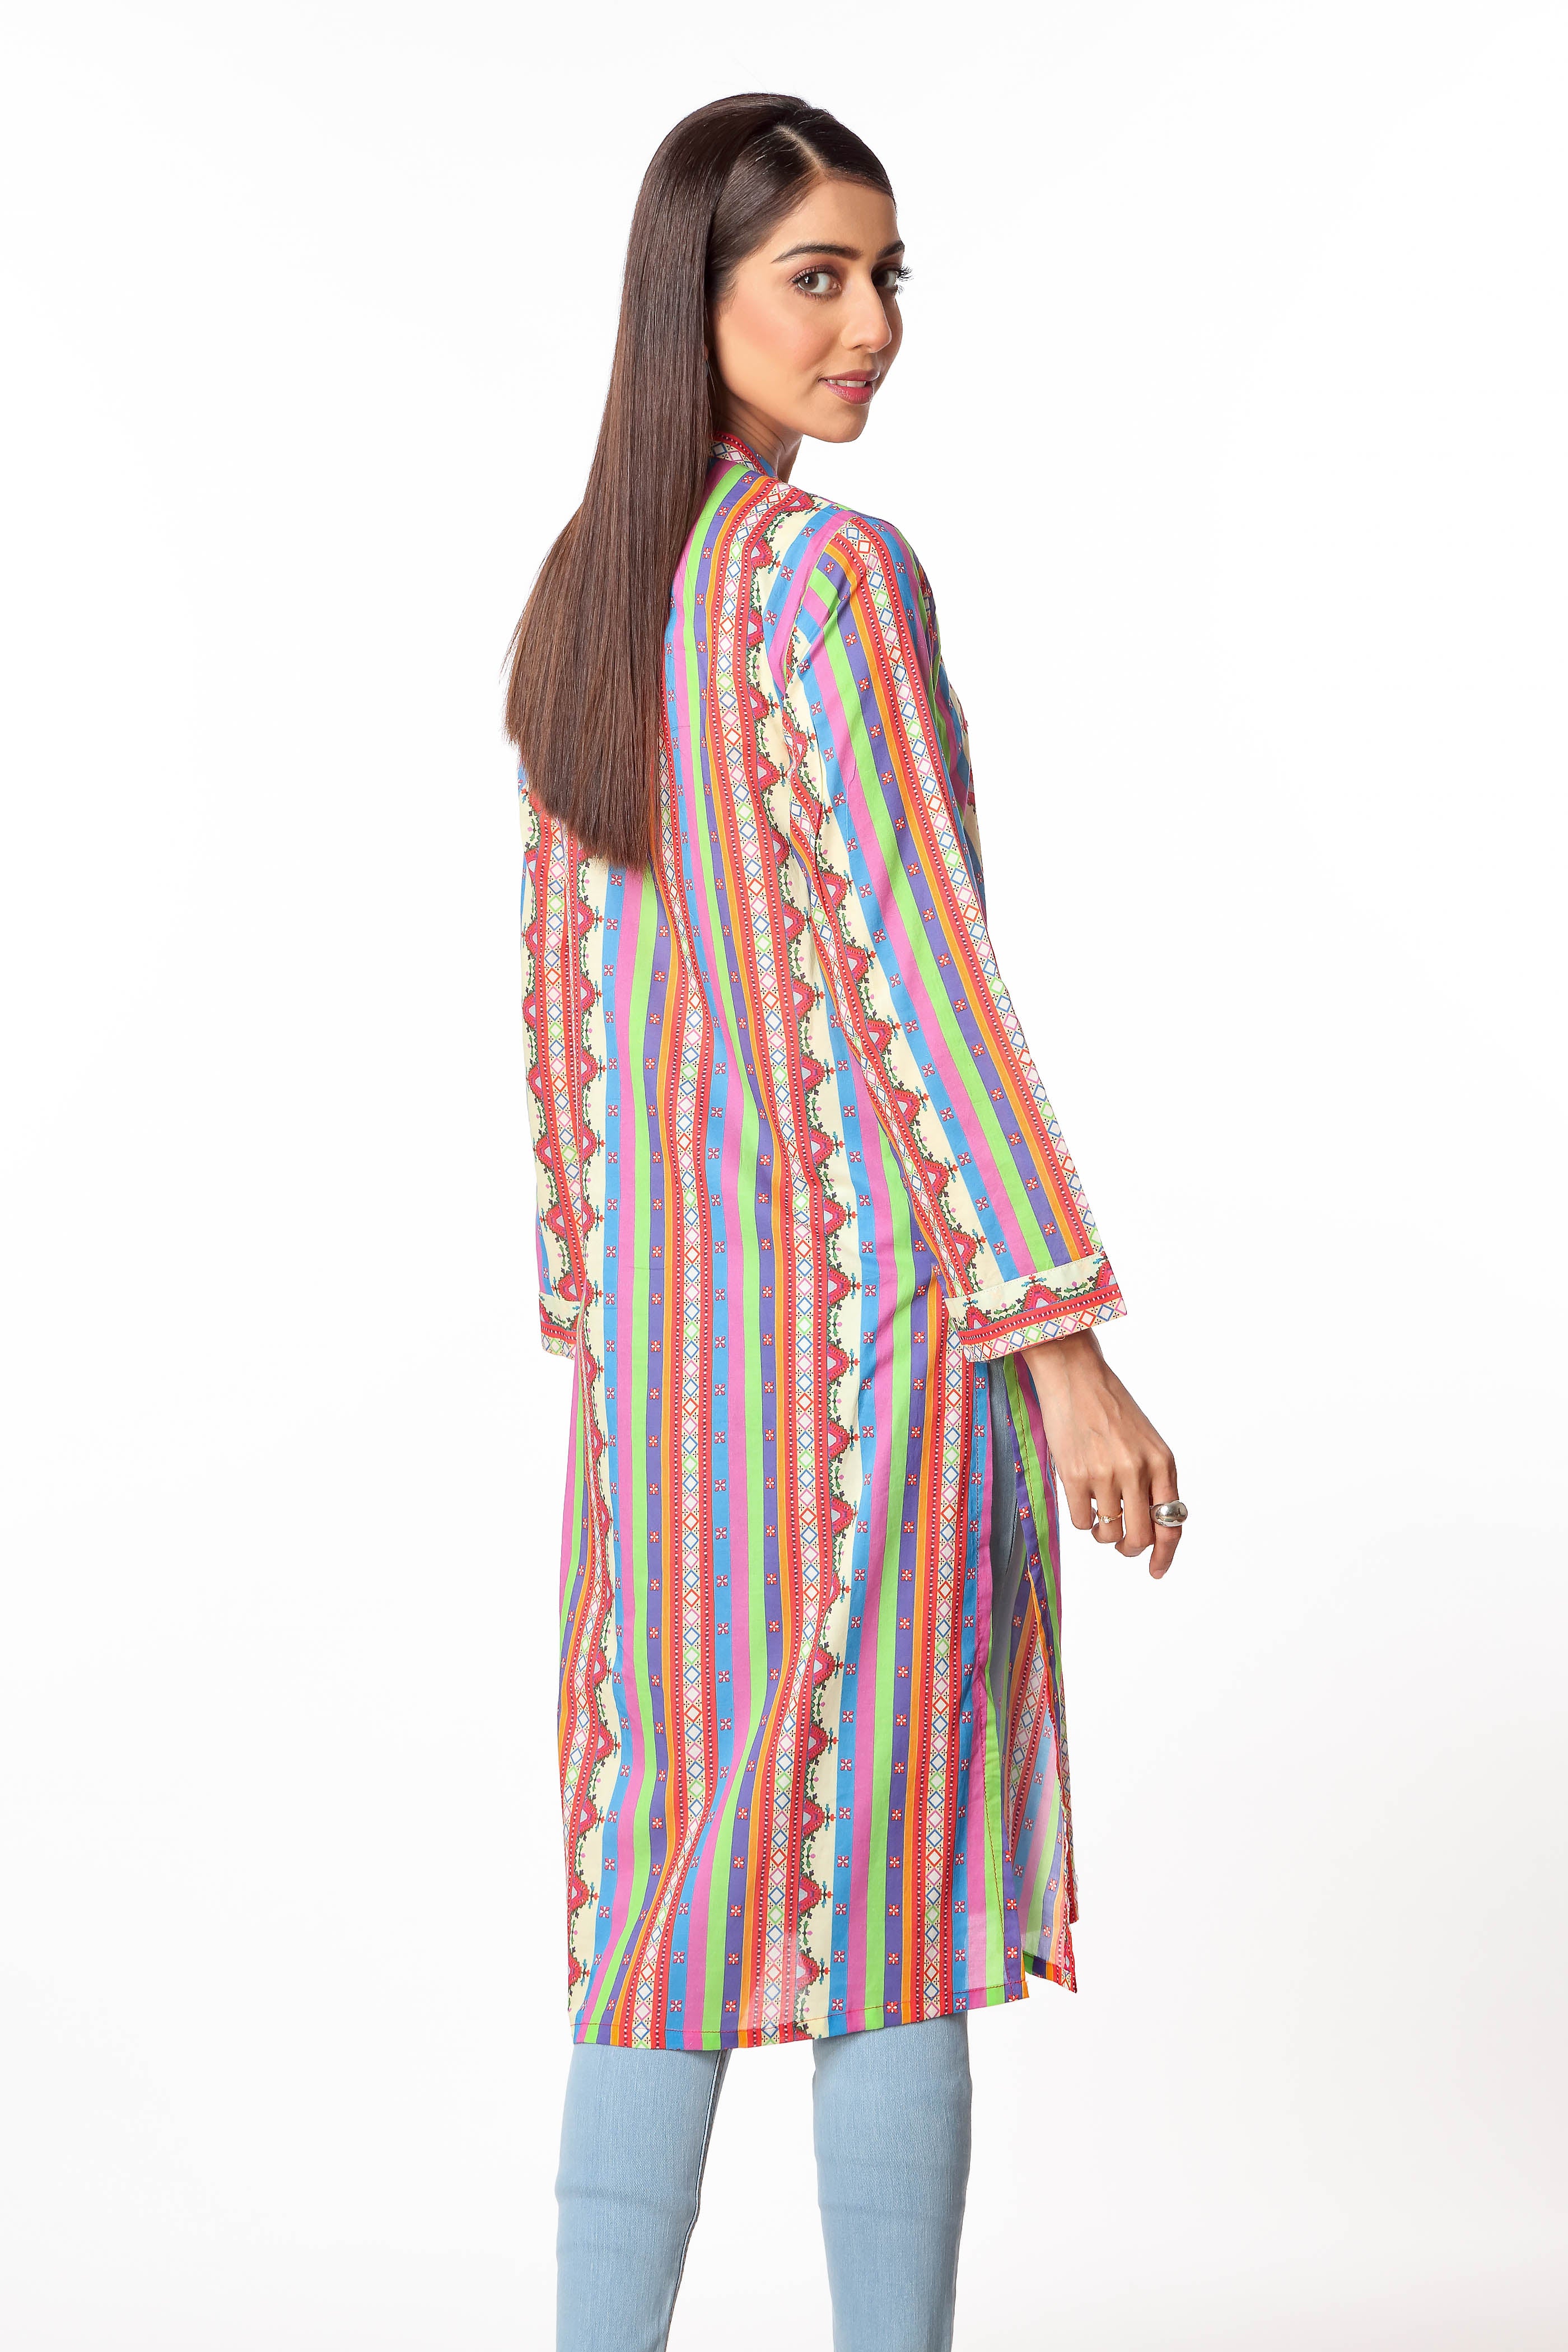 Rainbow Stripe in Multi coloured Printed Lawn fabric 3